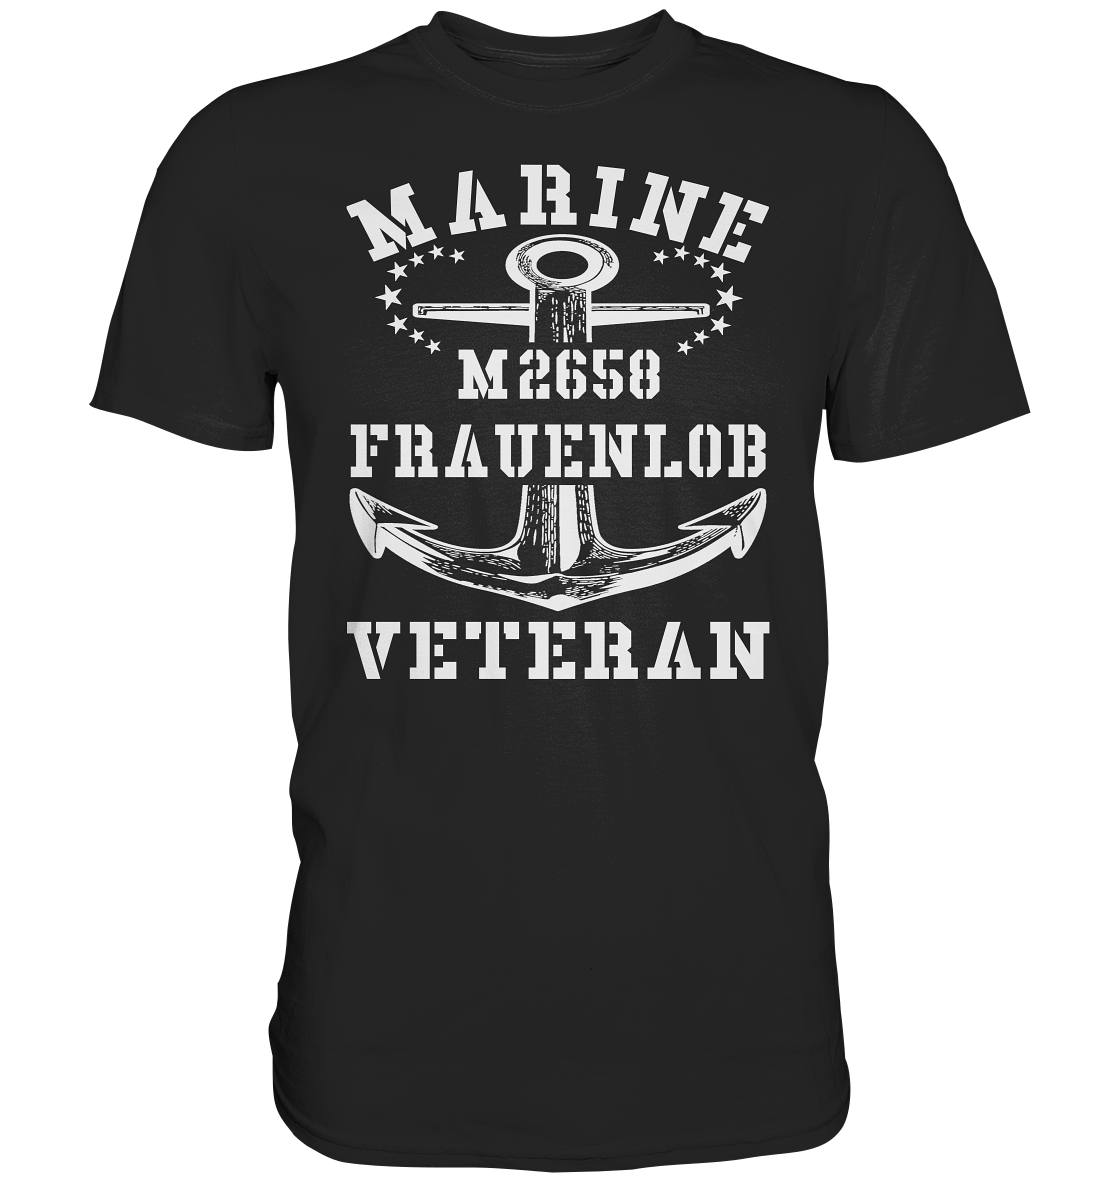 BiMi M2658 FRAUENLOB Marine Veteran - Premium Shirt